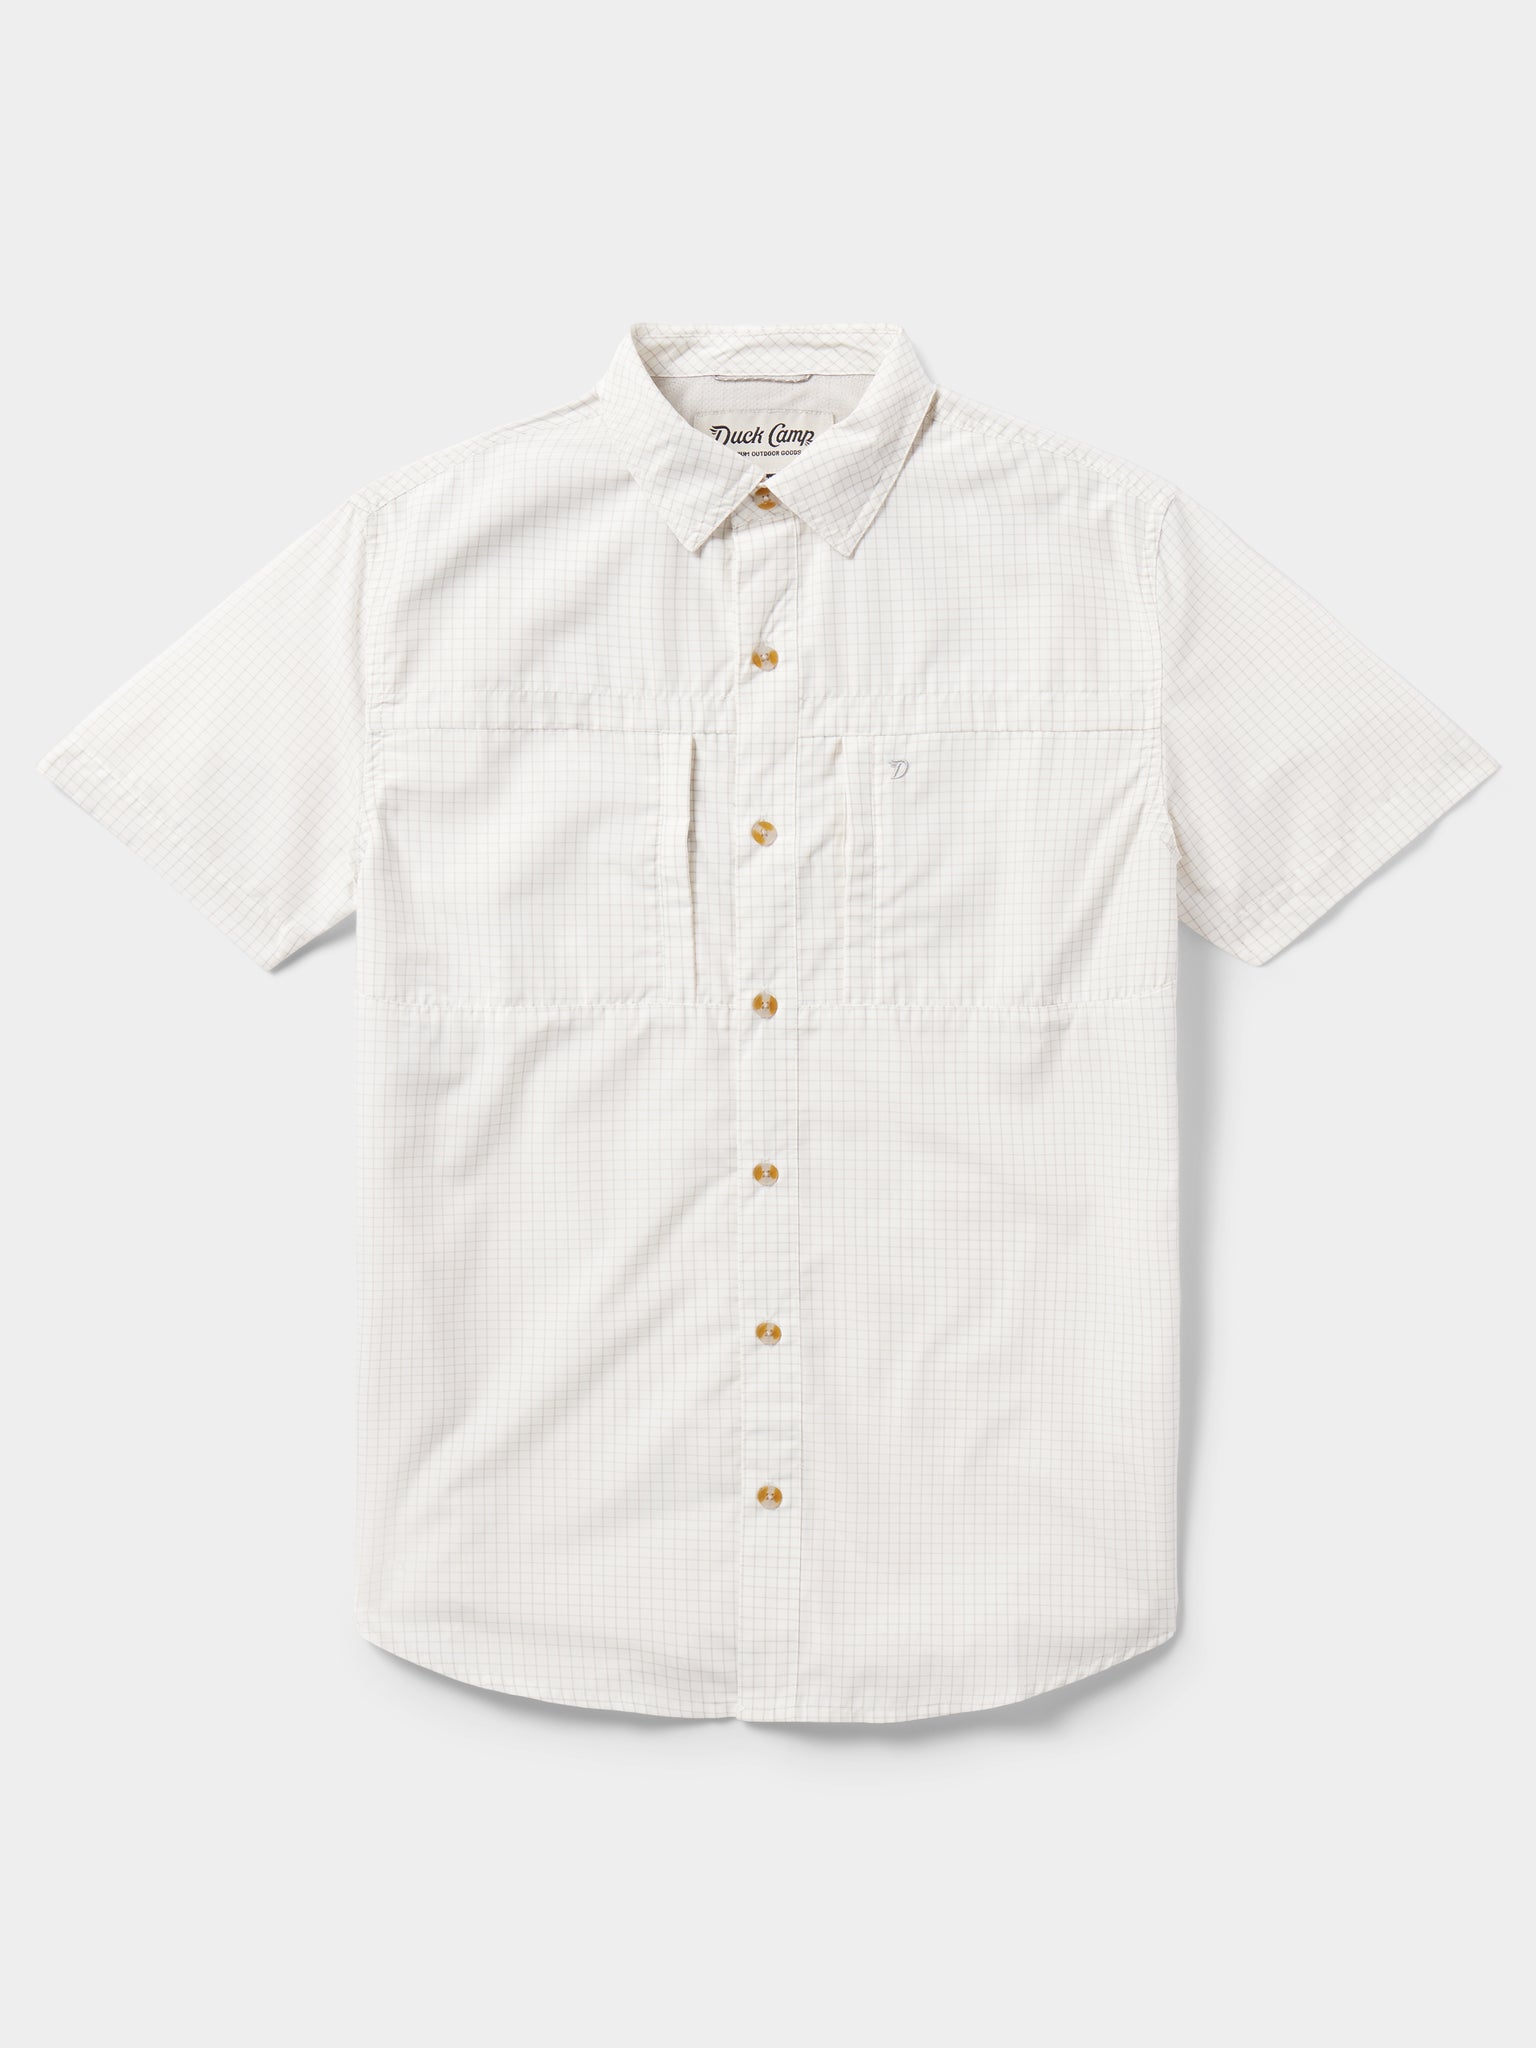 Duck Camp Signature Fishing Shirt - Short Sleeve - Lark